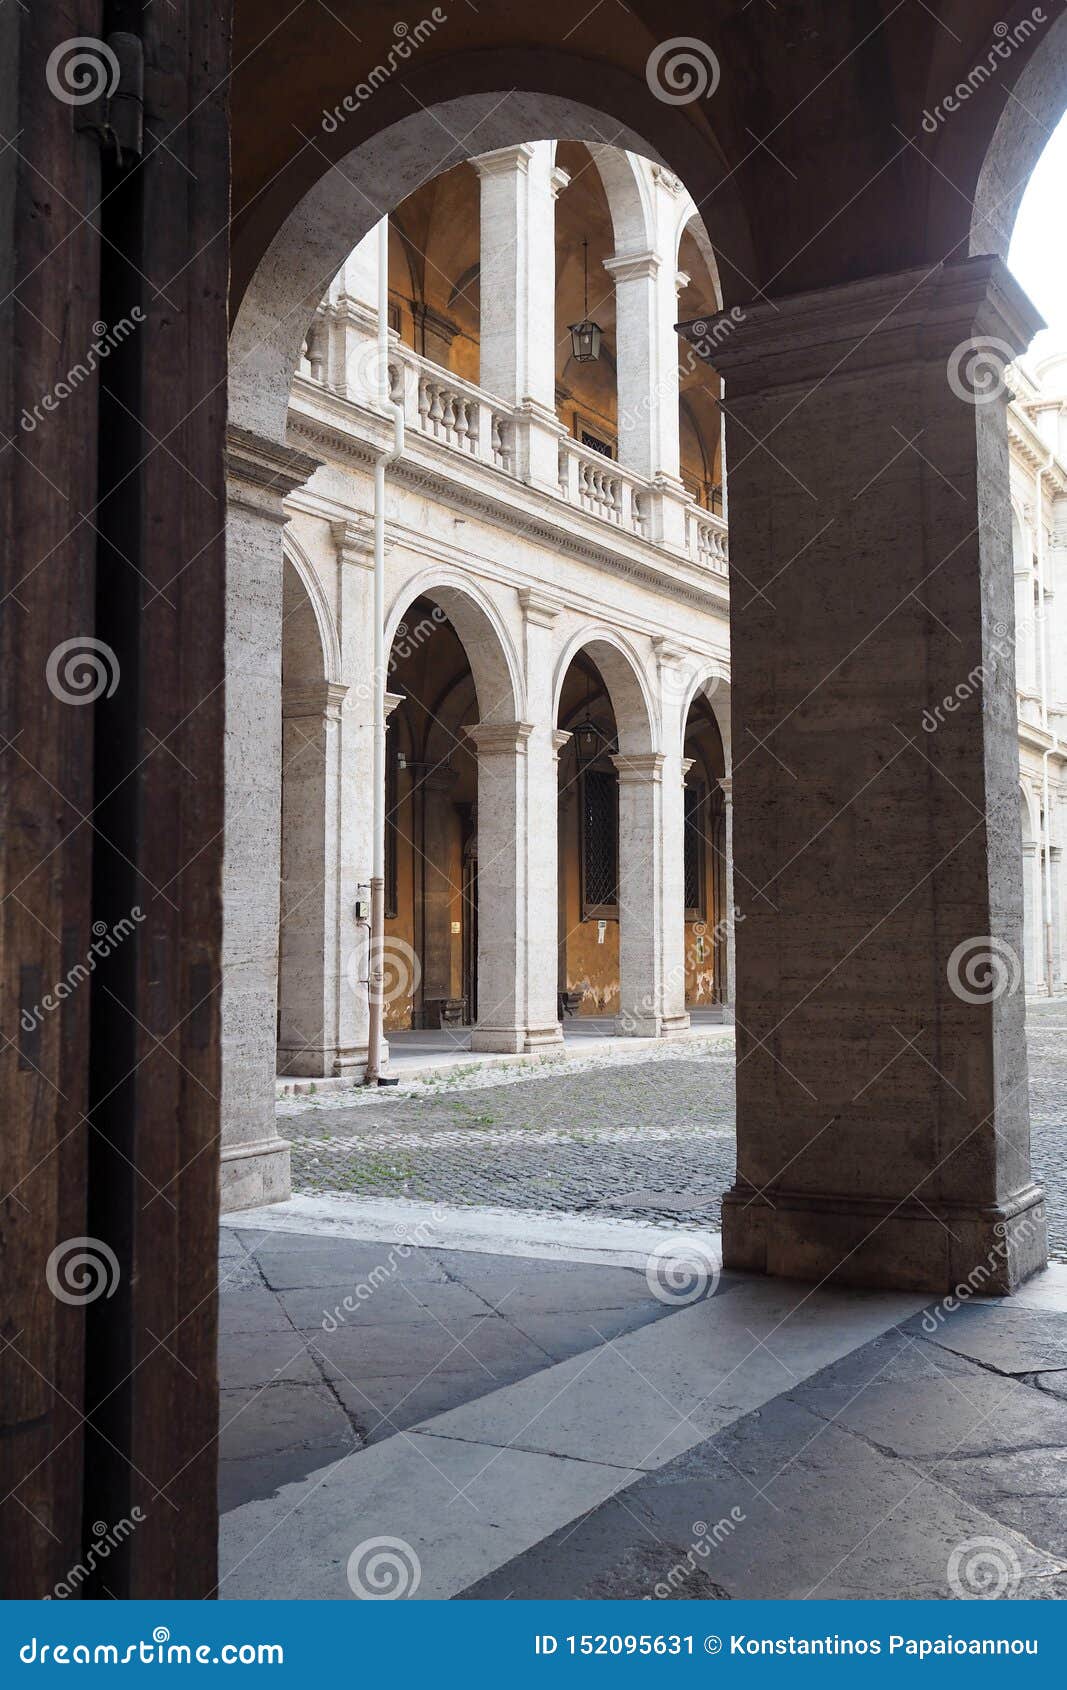 courtyard of giacomo della porta in rome, italy